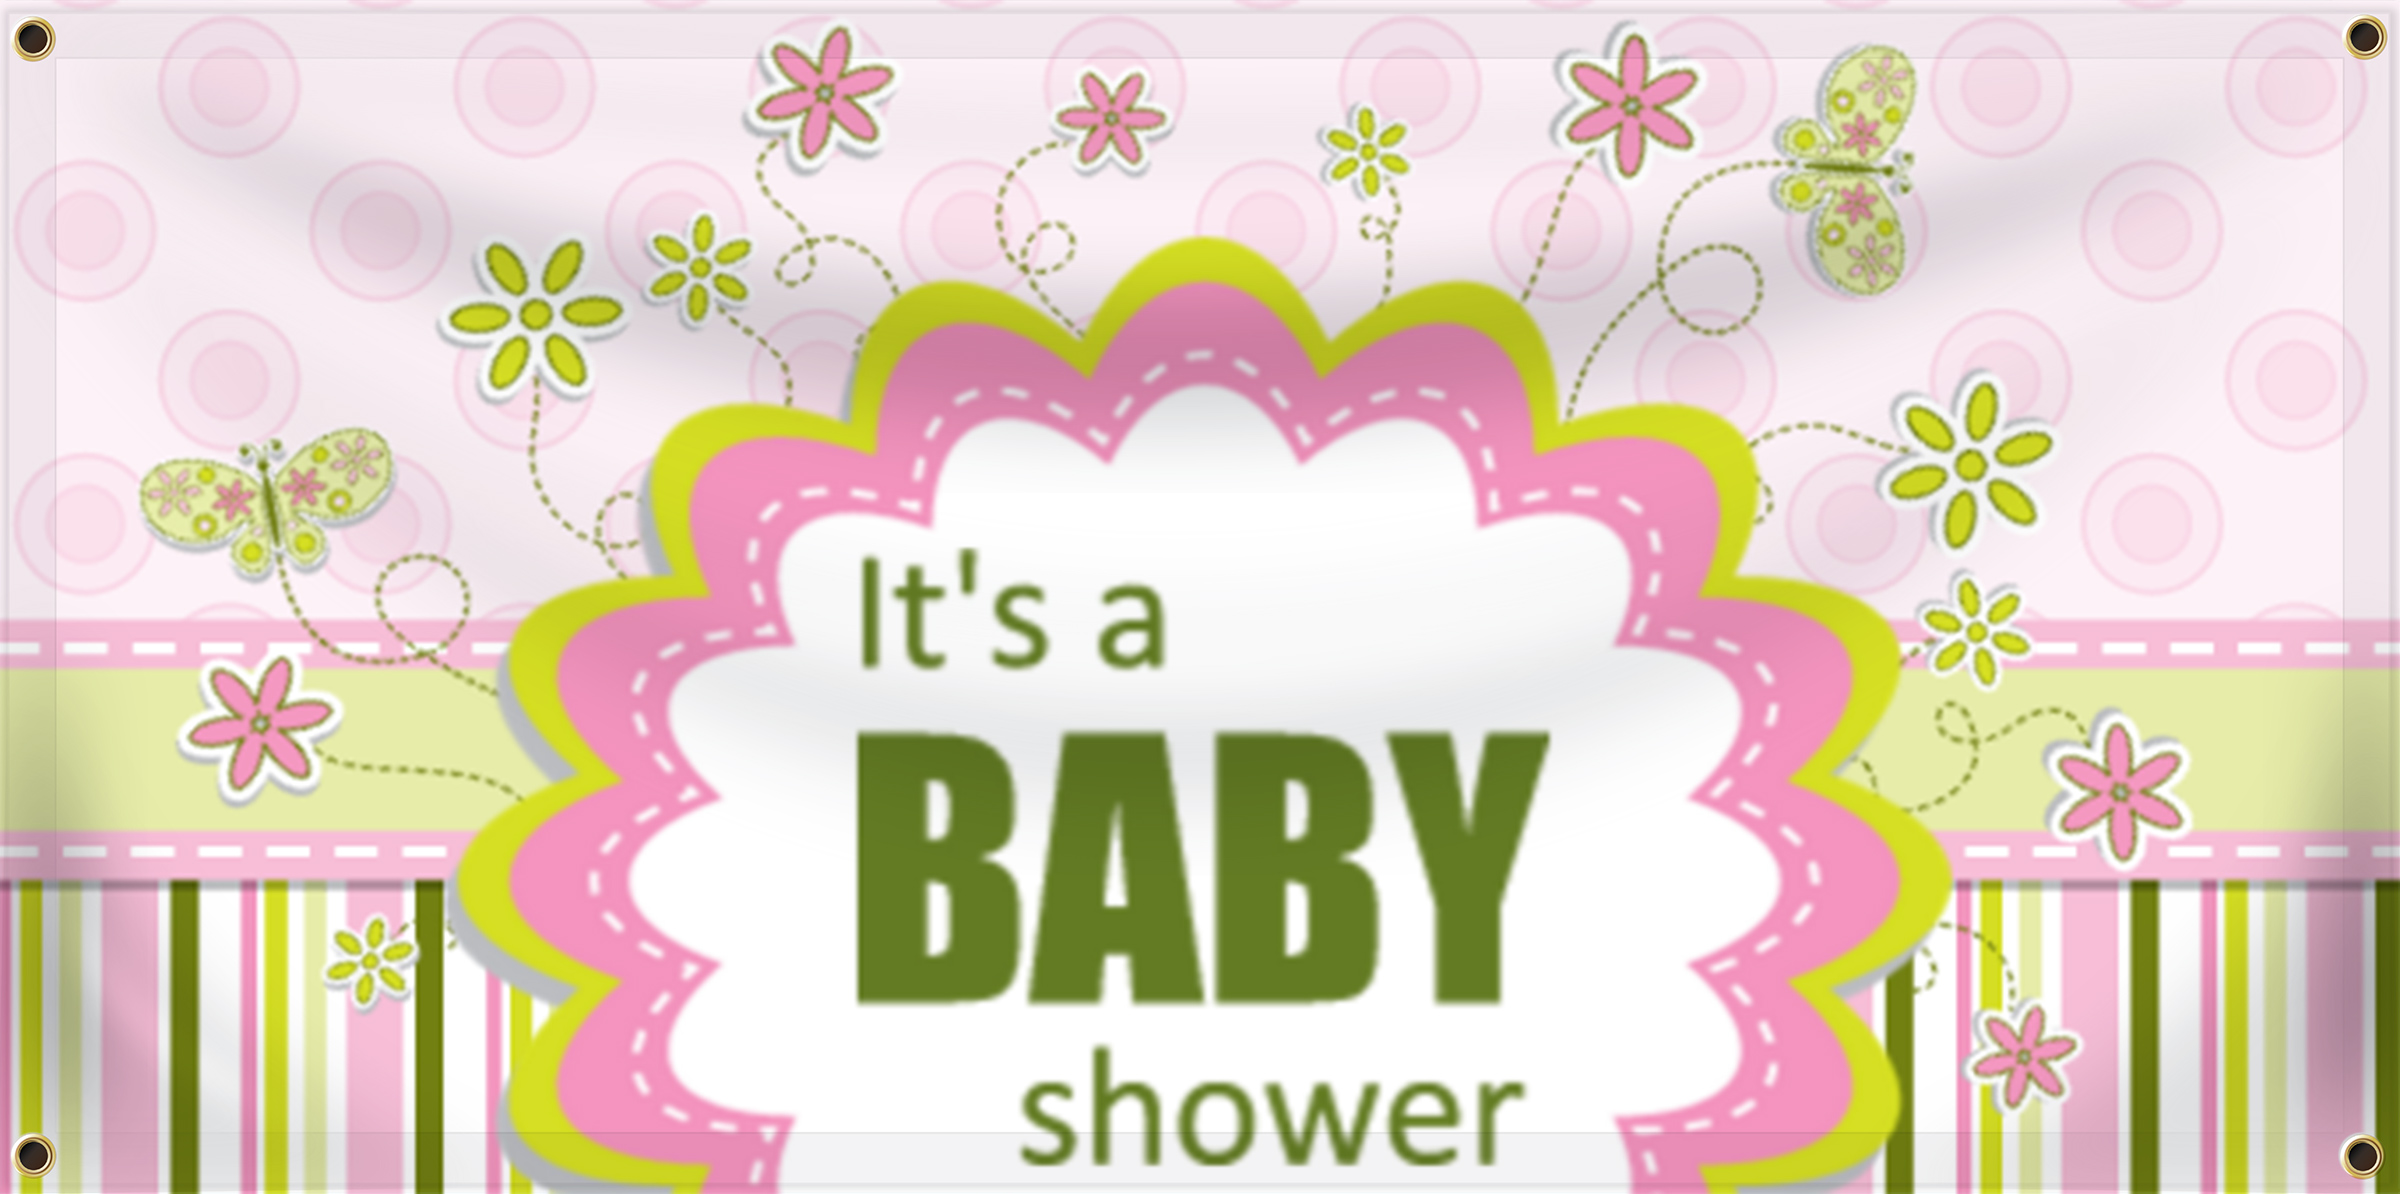 Baby Shower Banner Idea | LawnSigns.com